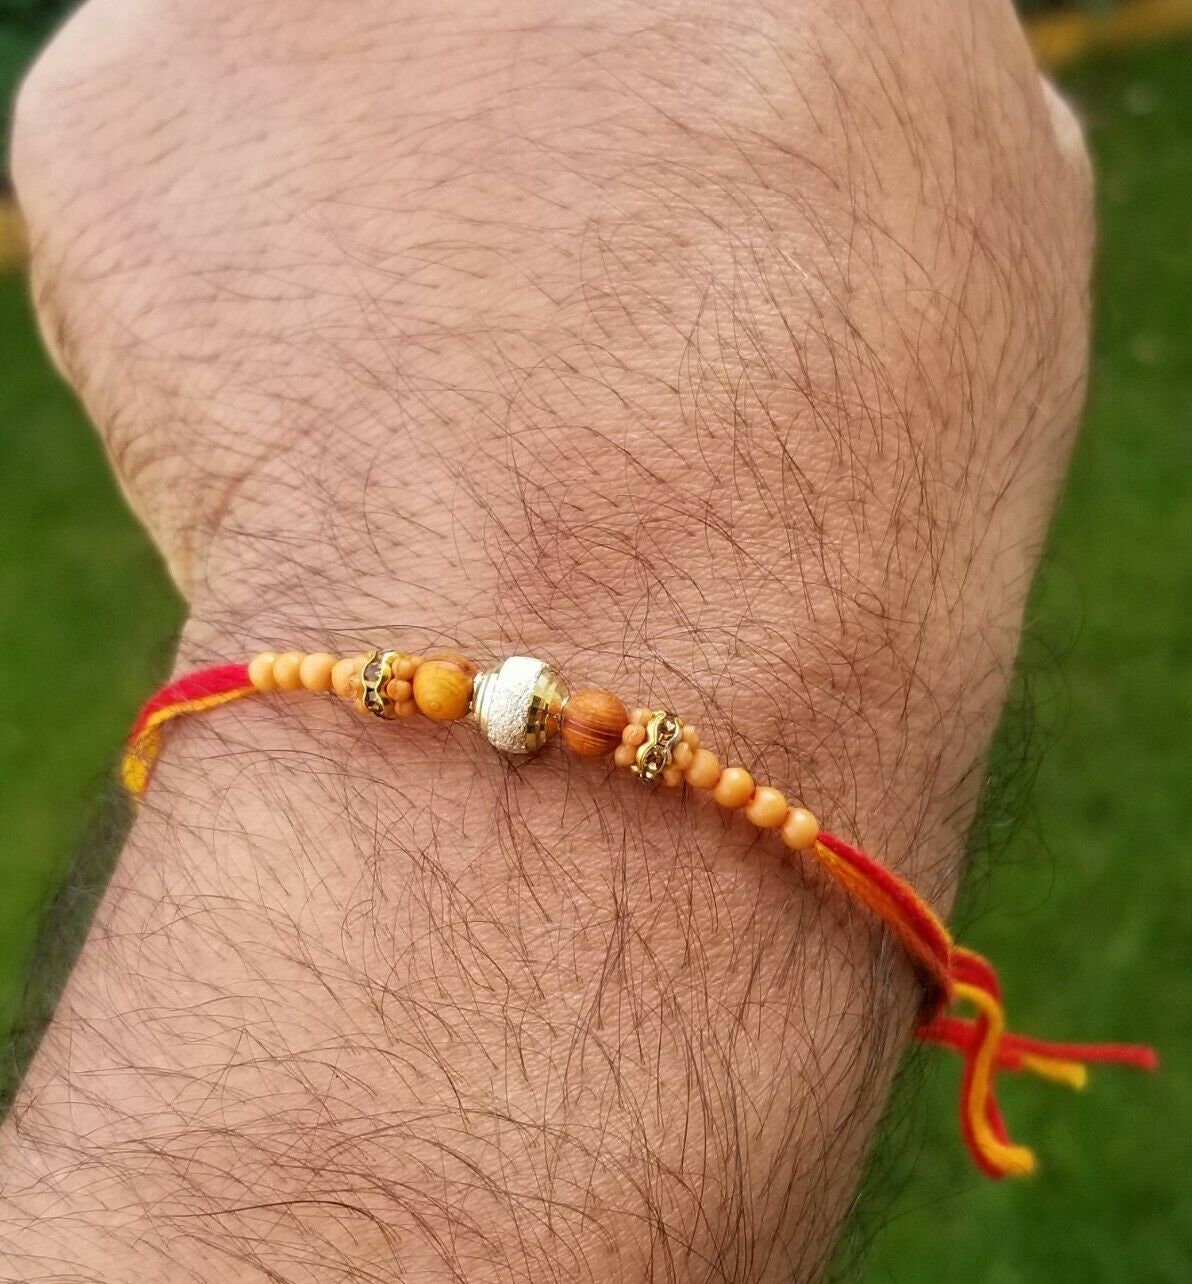 Hindu red thread evil eye protection stunning bracelet luck talisman a   wwwOnlineSikhStorecom